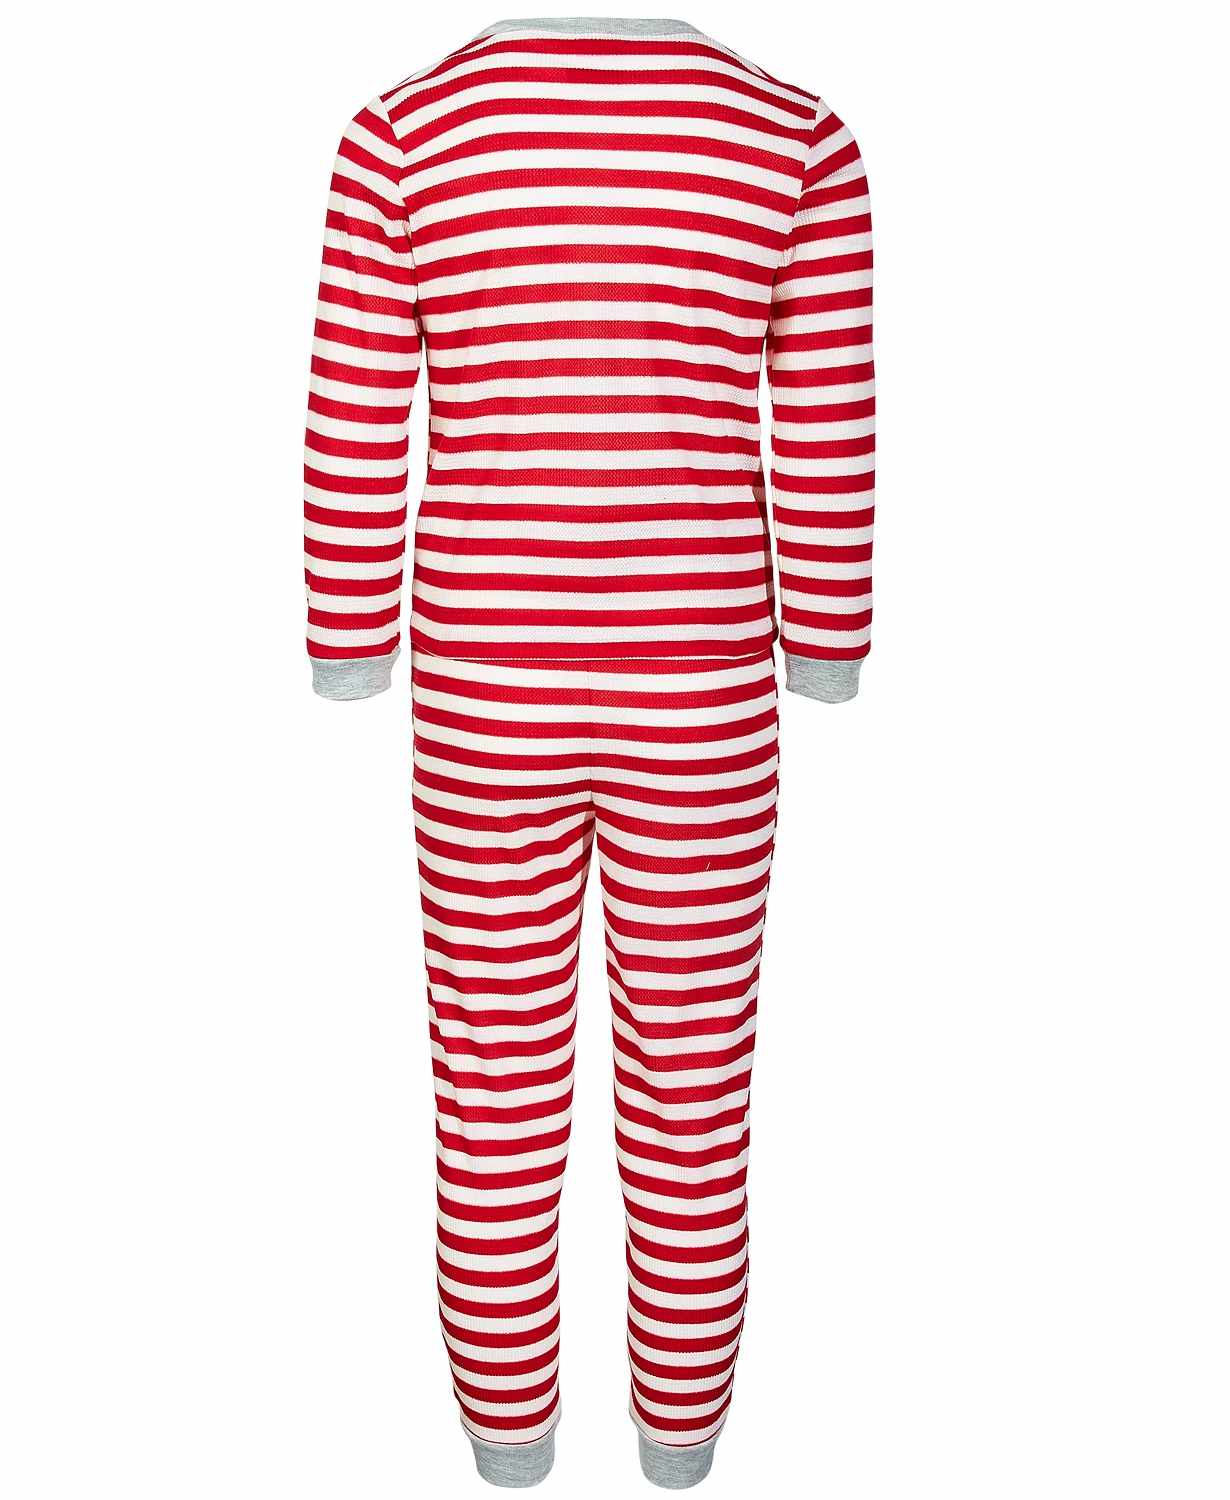 Family Pajamas Little & Big Kids Matching 2 Pieces Striped Pajama Set